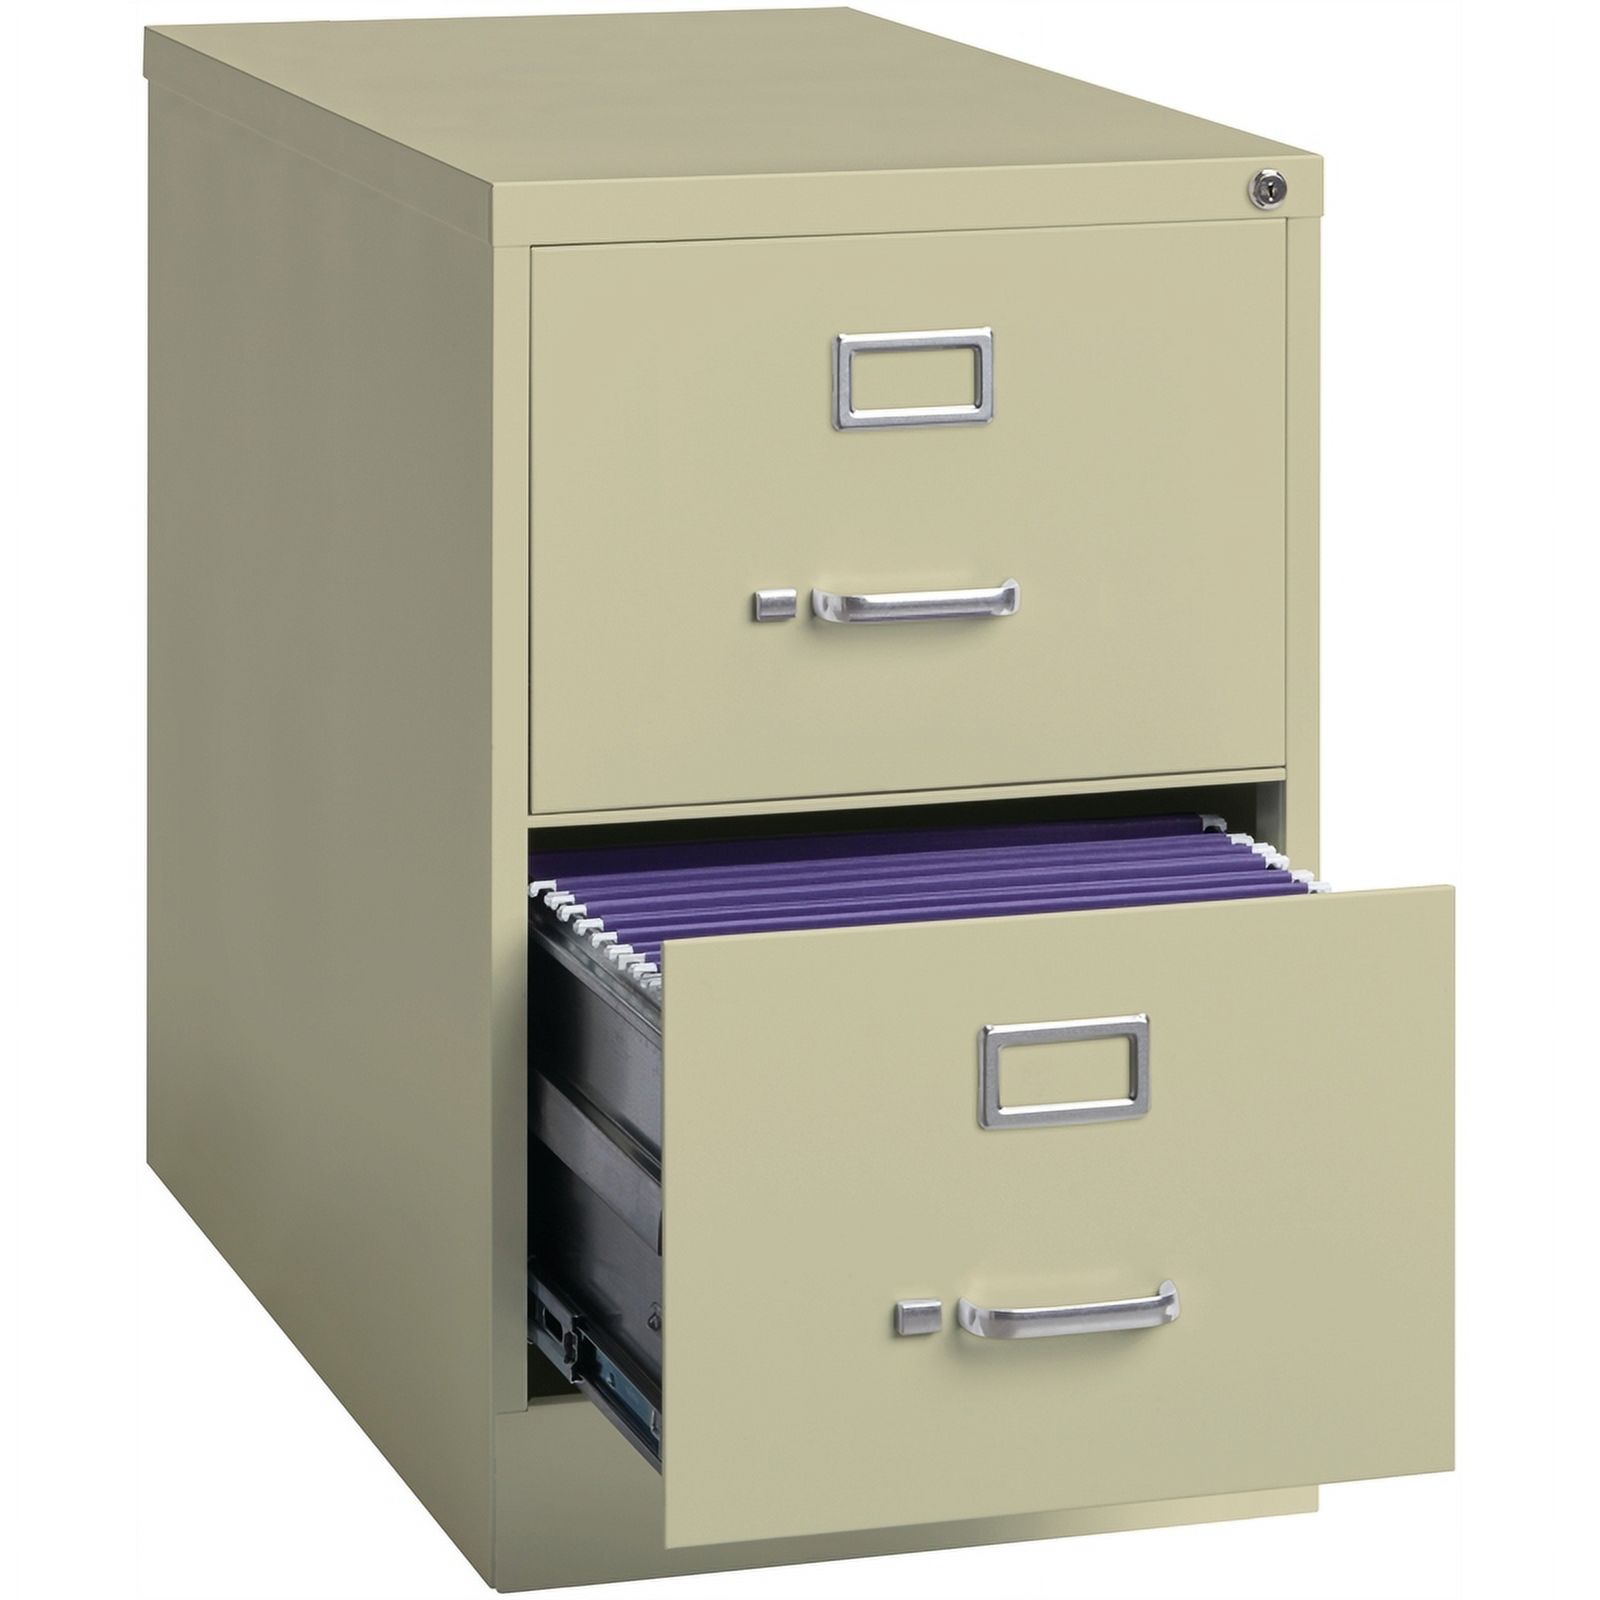 Scranton & Co 26.5" 2-Drawer Metal Legal Width Vertical File Cabinet in Beige - image 4 of 5